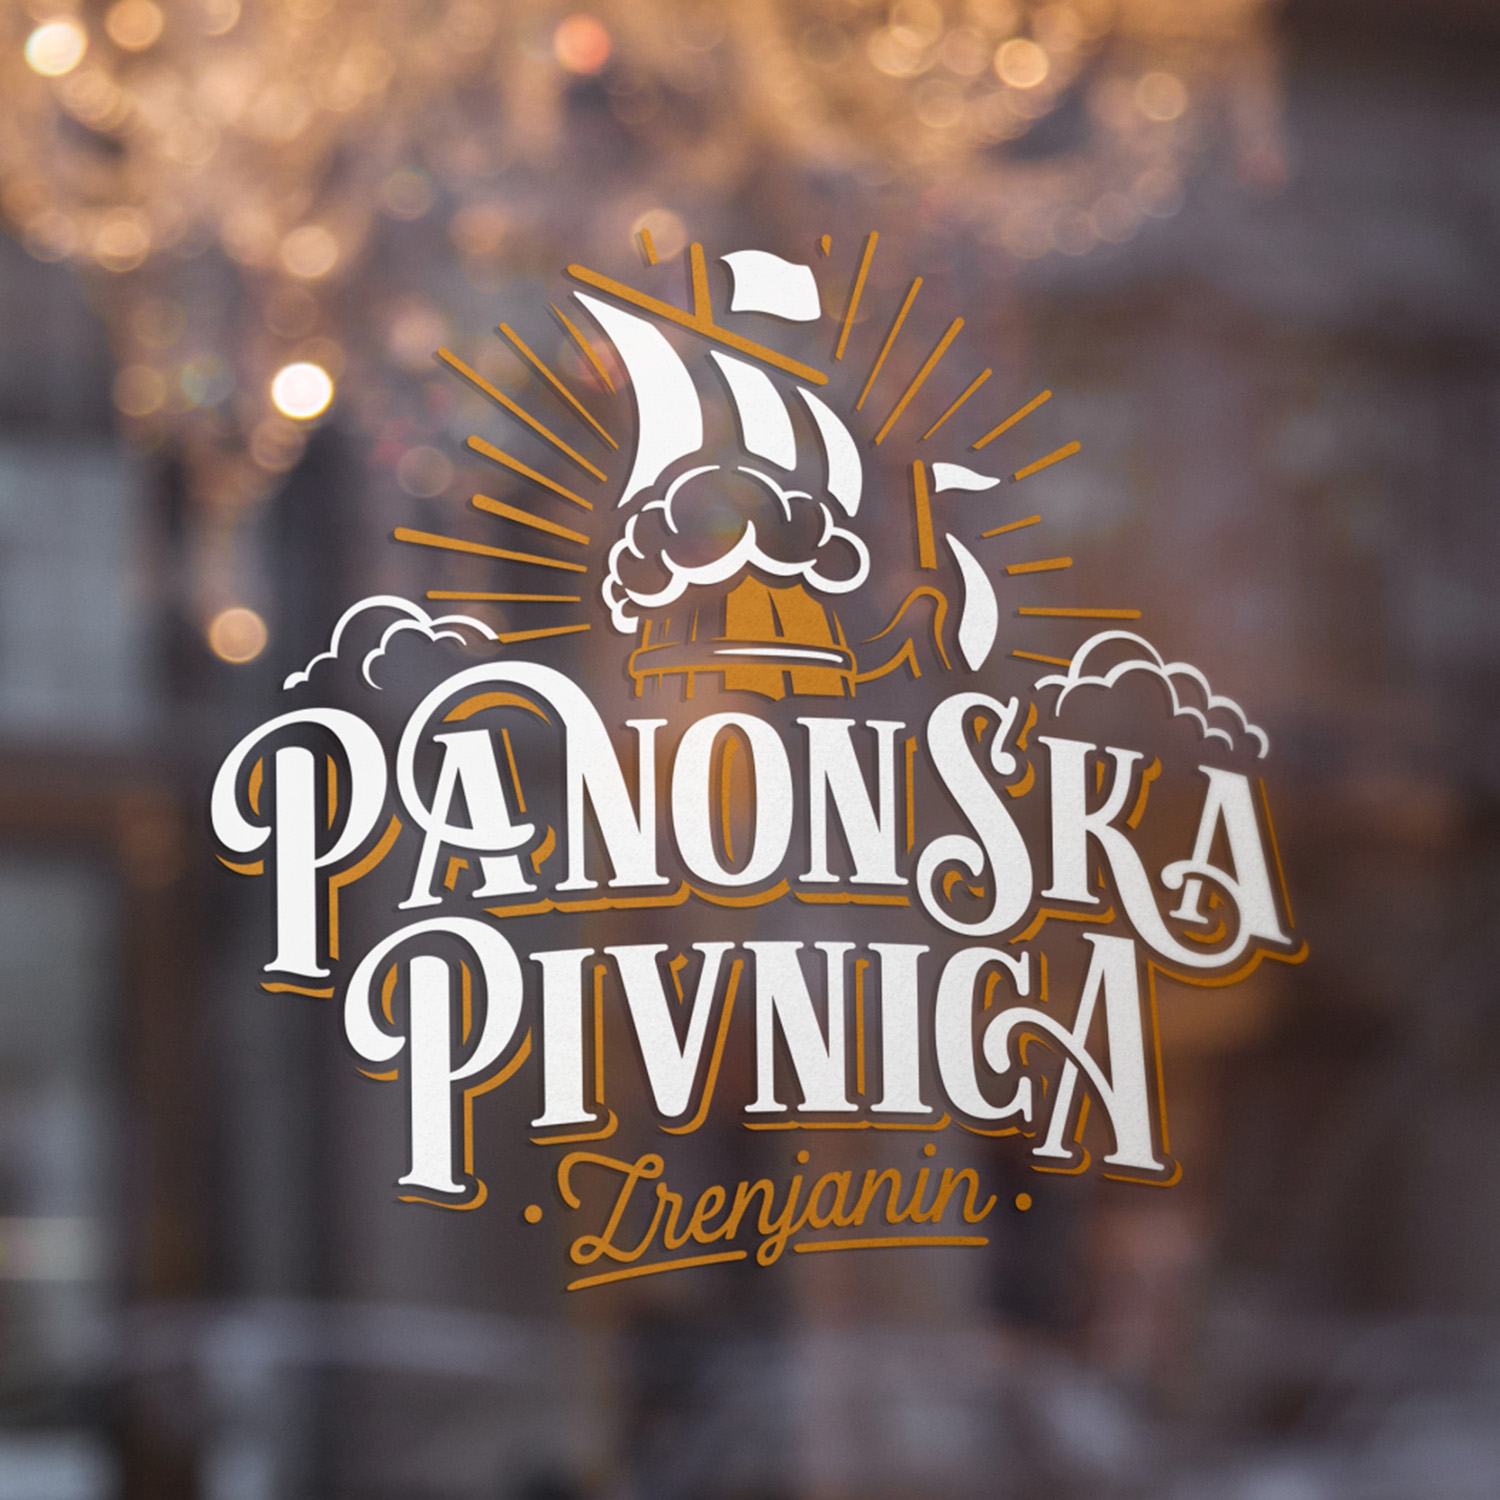 Panonska pivnica logo design